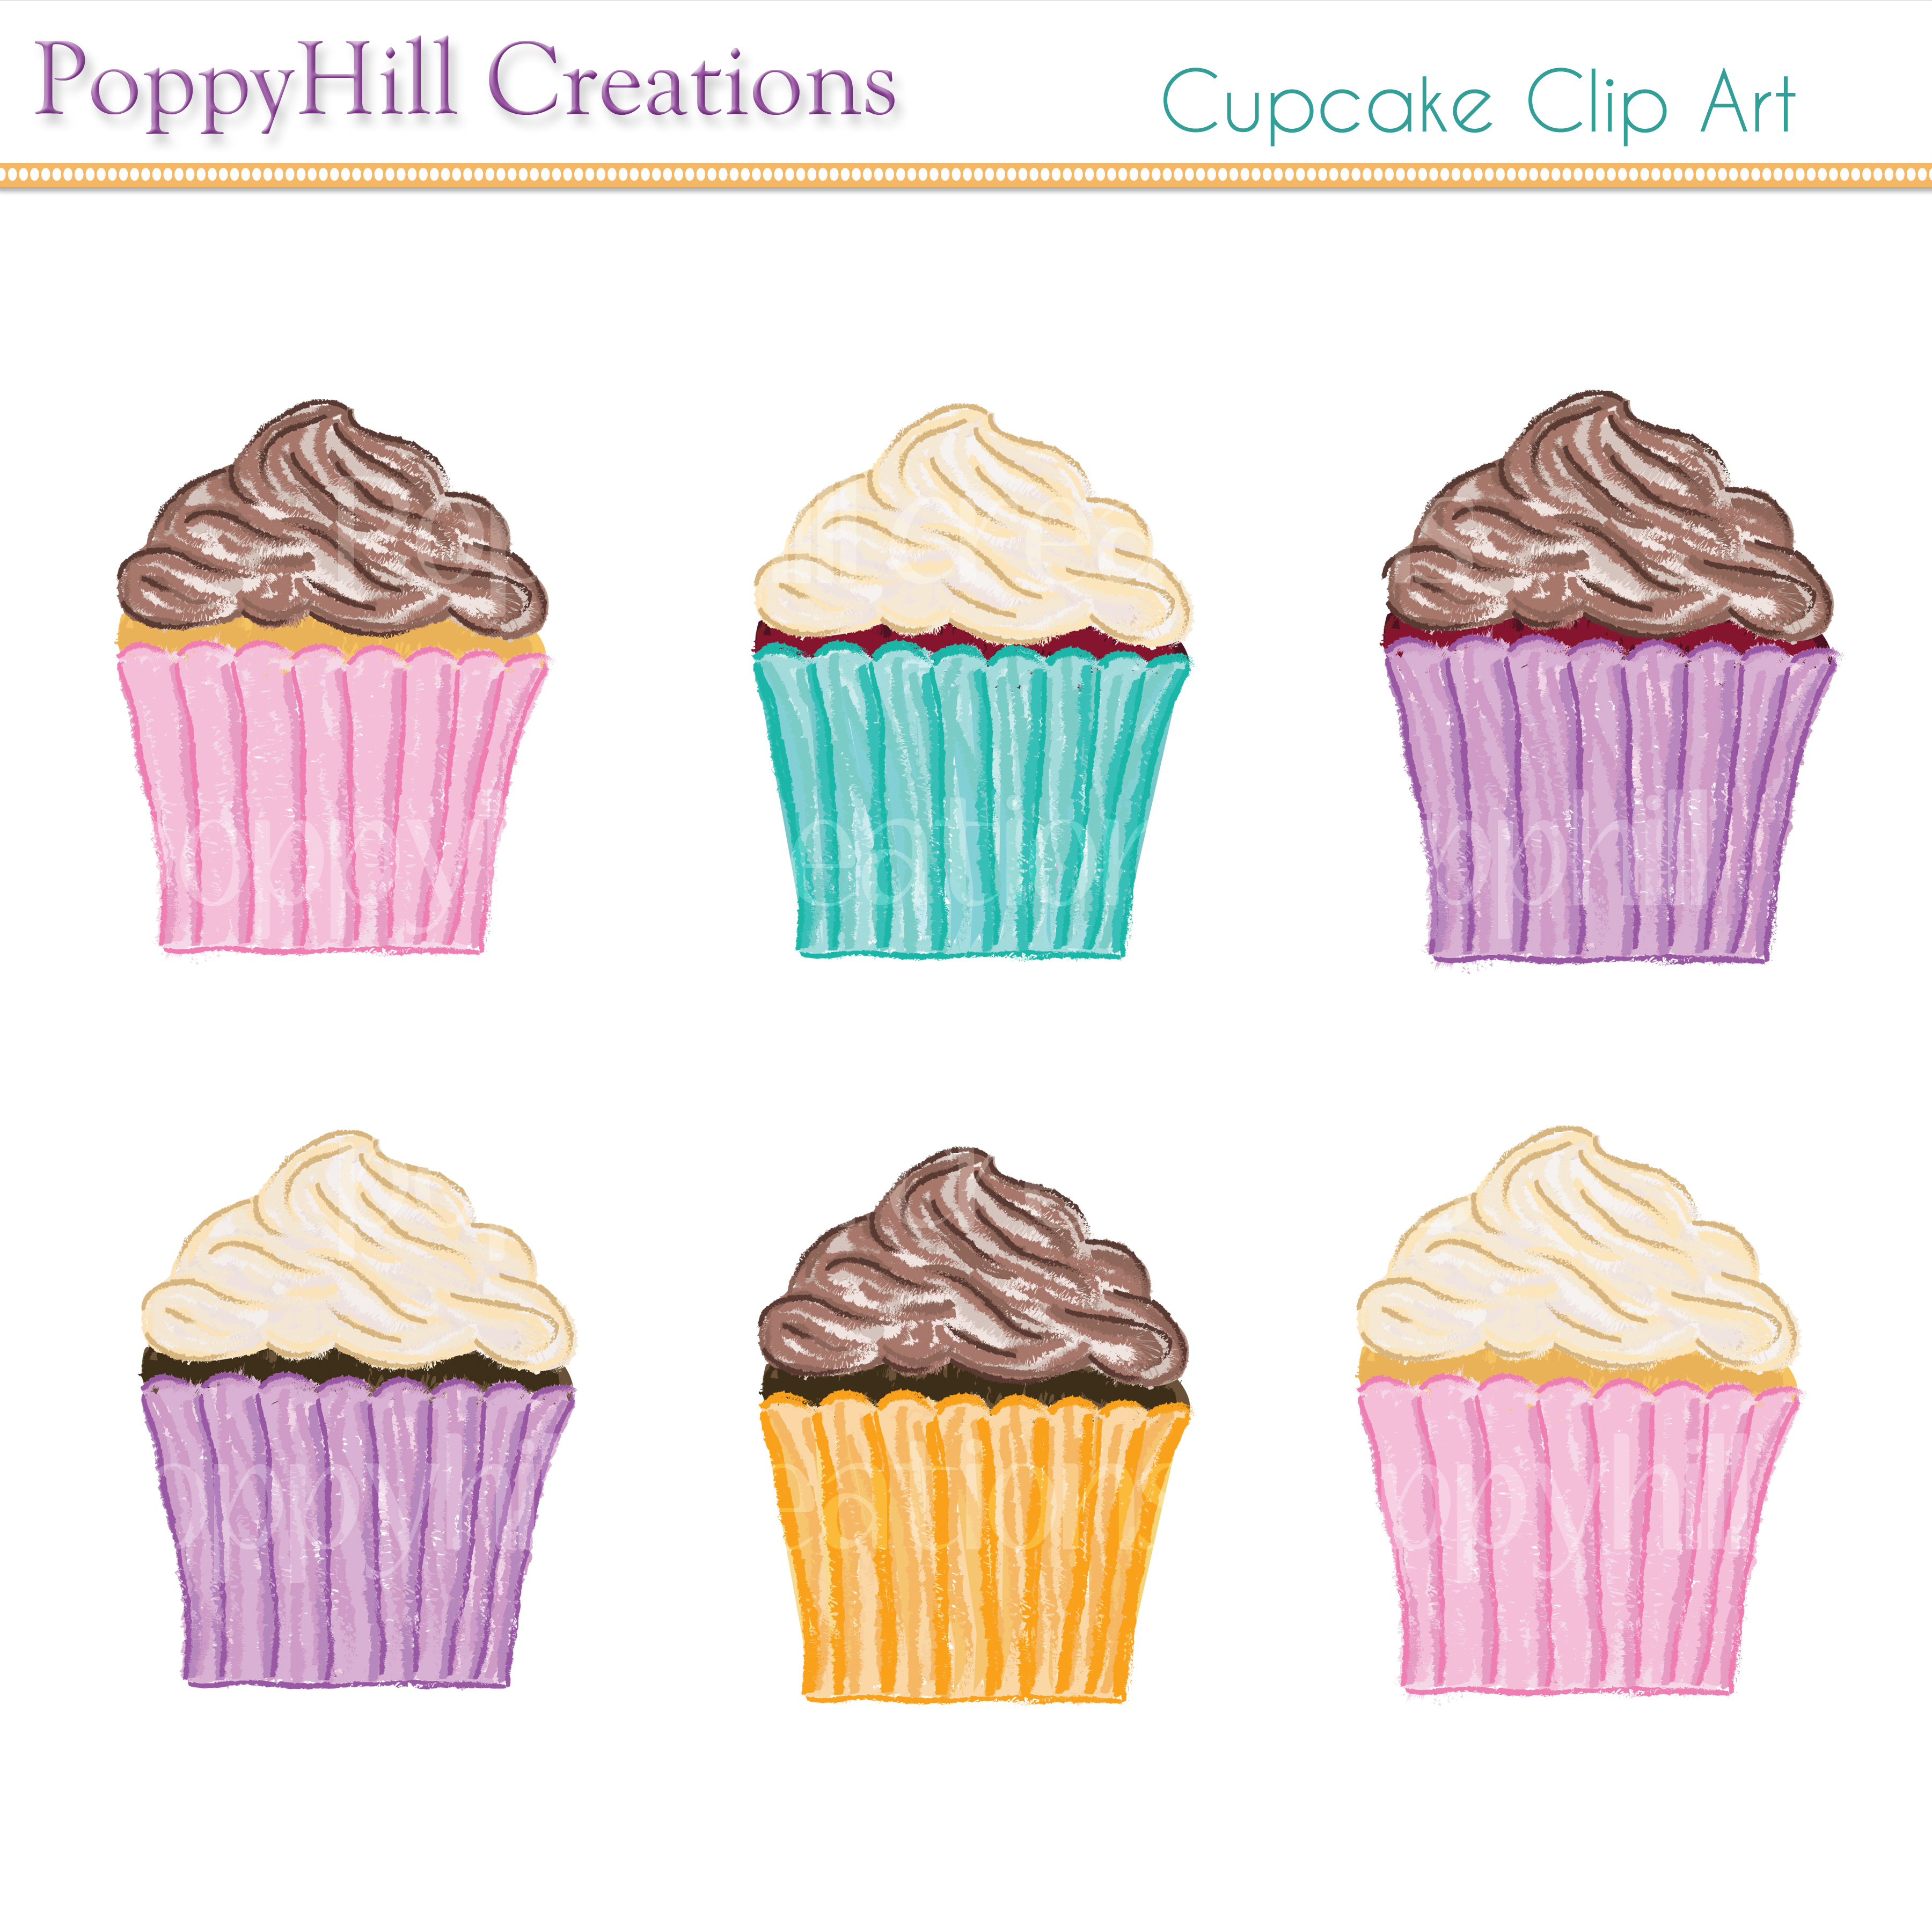 New Cupcake Clip Art | PoppyHill Creations